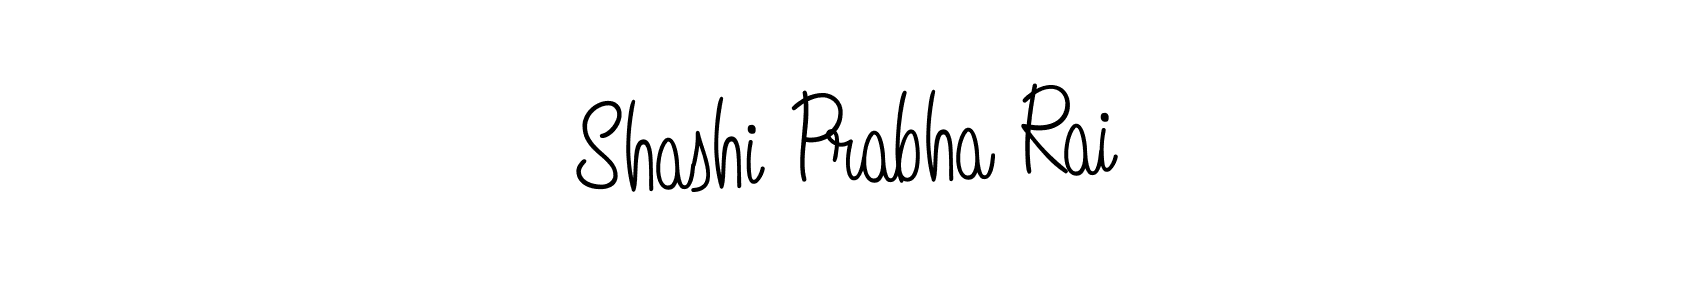 How to Draw Shashi Prabha Rai signature style? Angelique-Rose-font-FFP is a latest design signature styles for name Shashi Prabha Rai. Shashi Prabha Rai signature style 5 images and pictures png